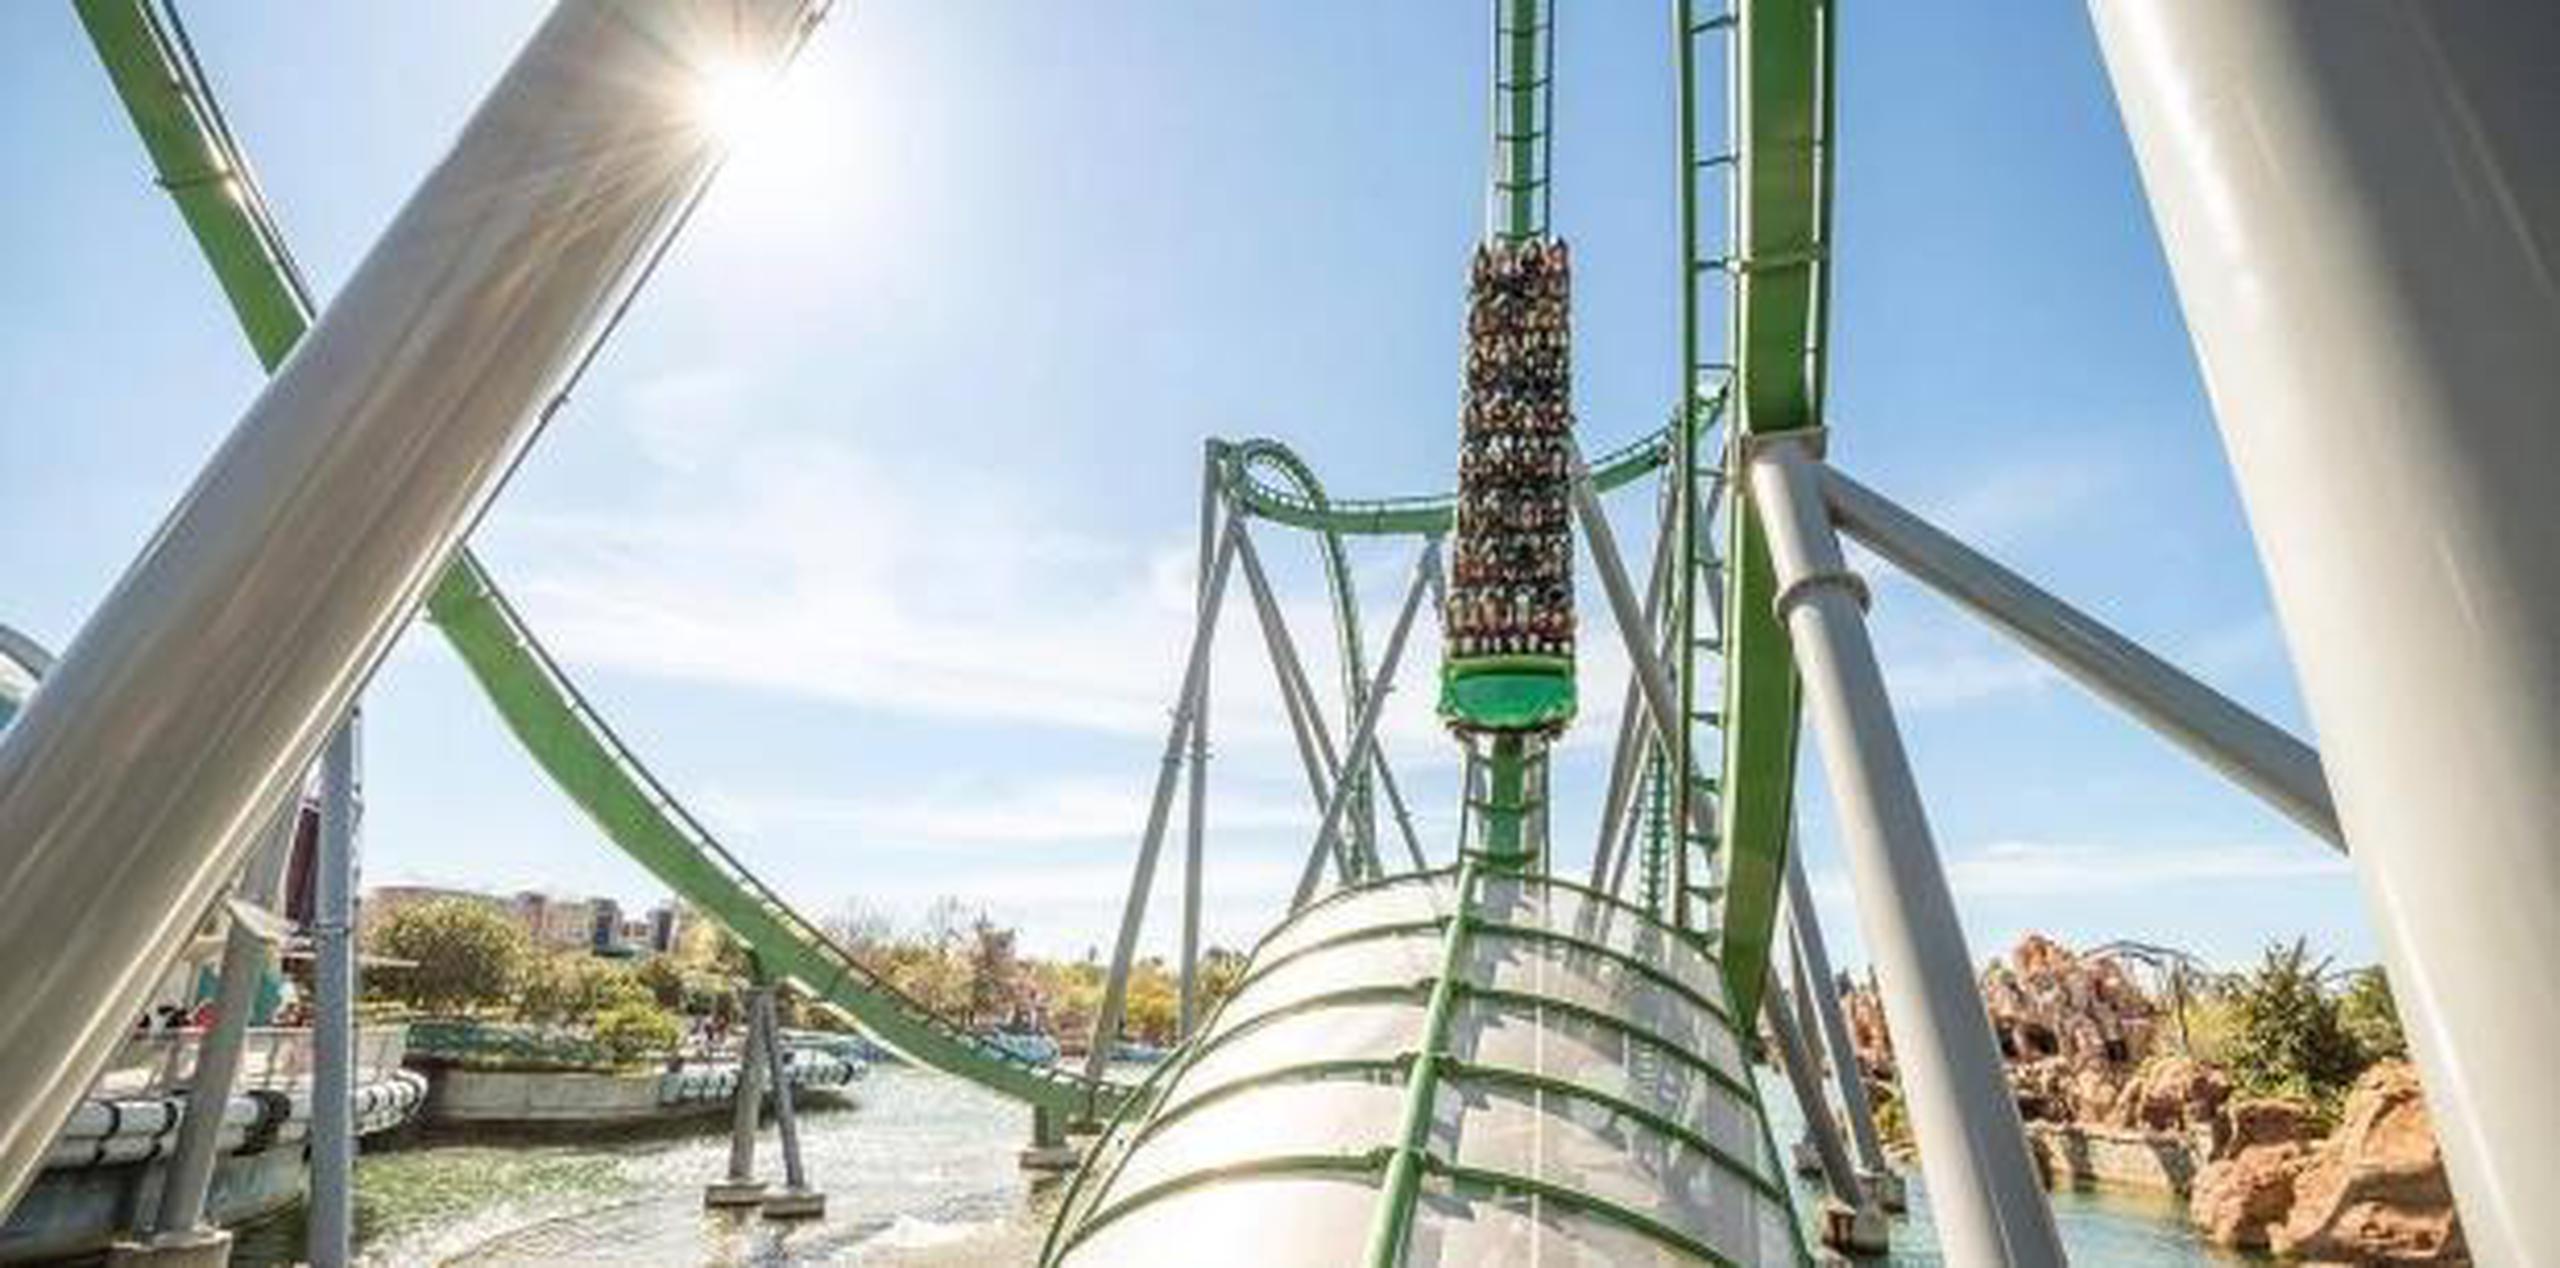 Montaña rusa "The Incredible Hulk Coaster" en Universal's Islands of Adventure. (Facebook / Universal Orlando Resort)